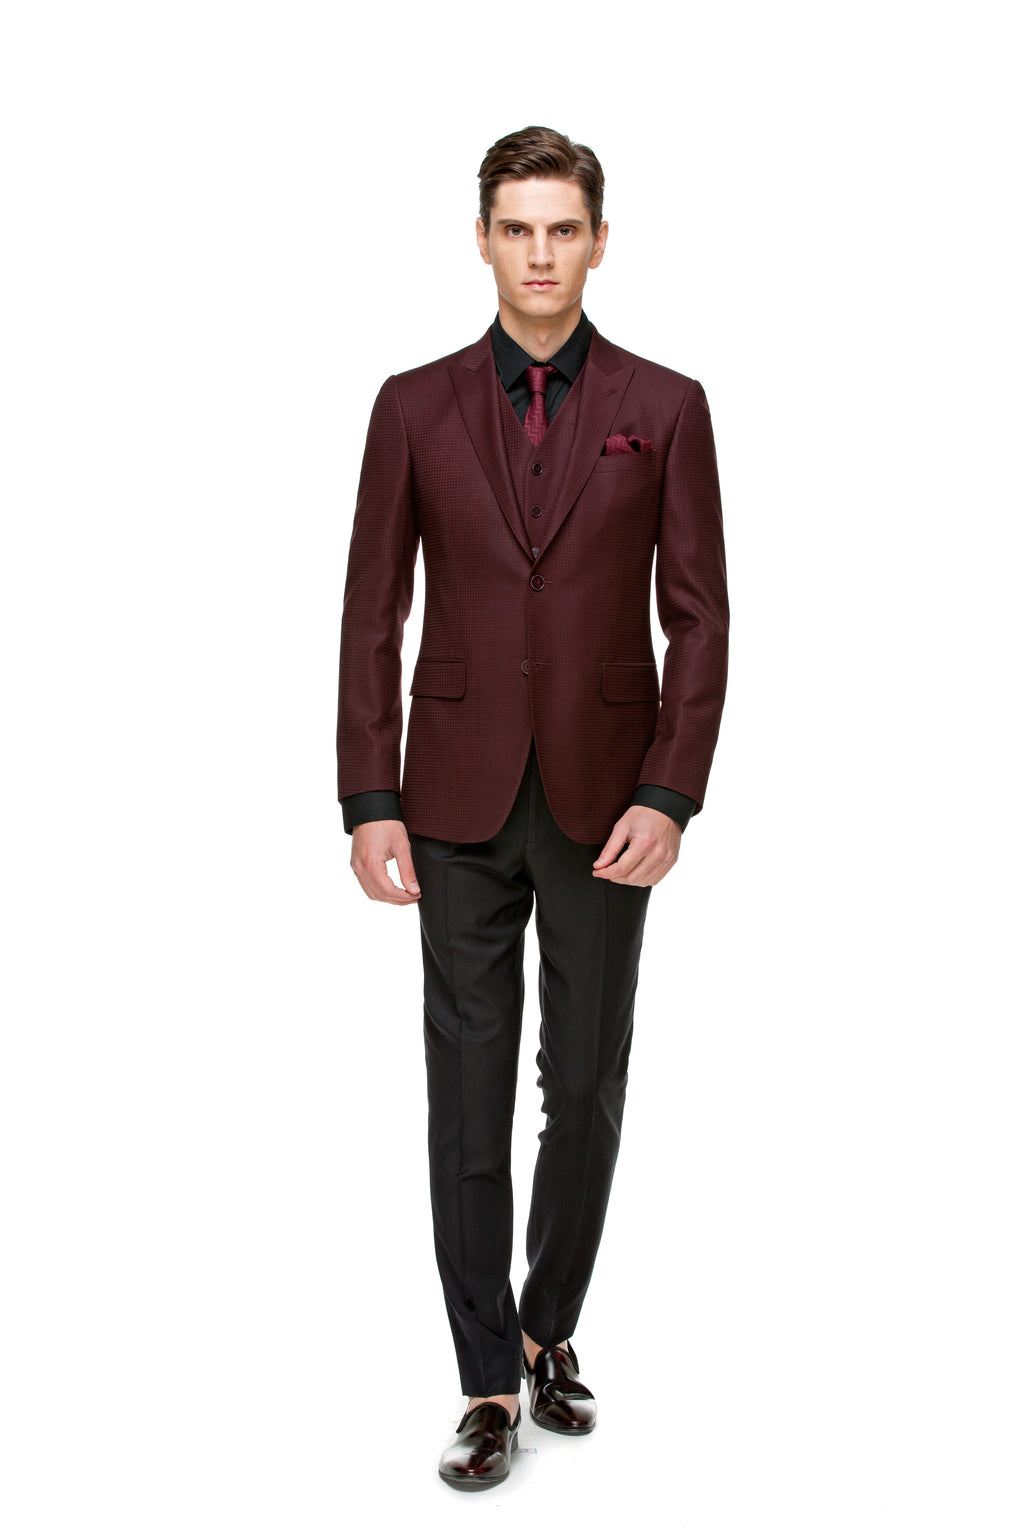 Custom Burgundy & Black Suit ottotos 3 pcs